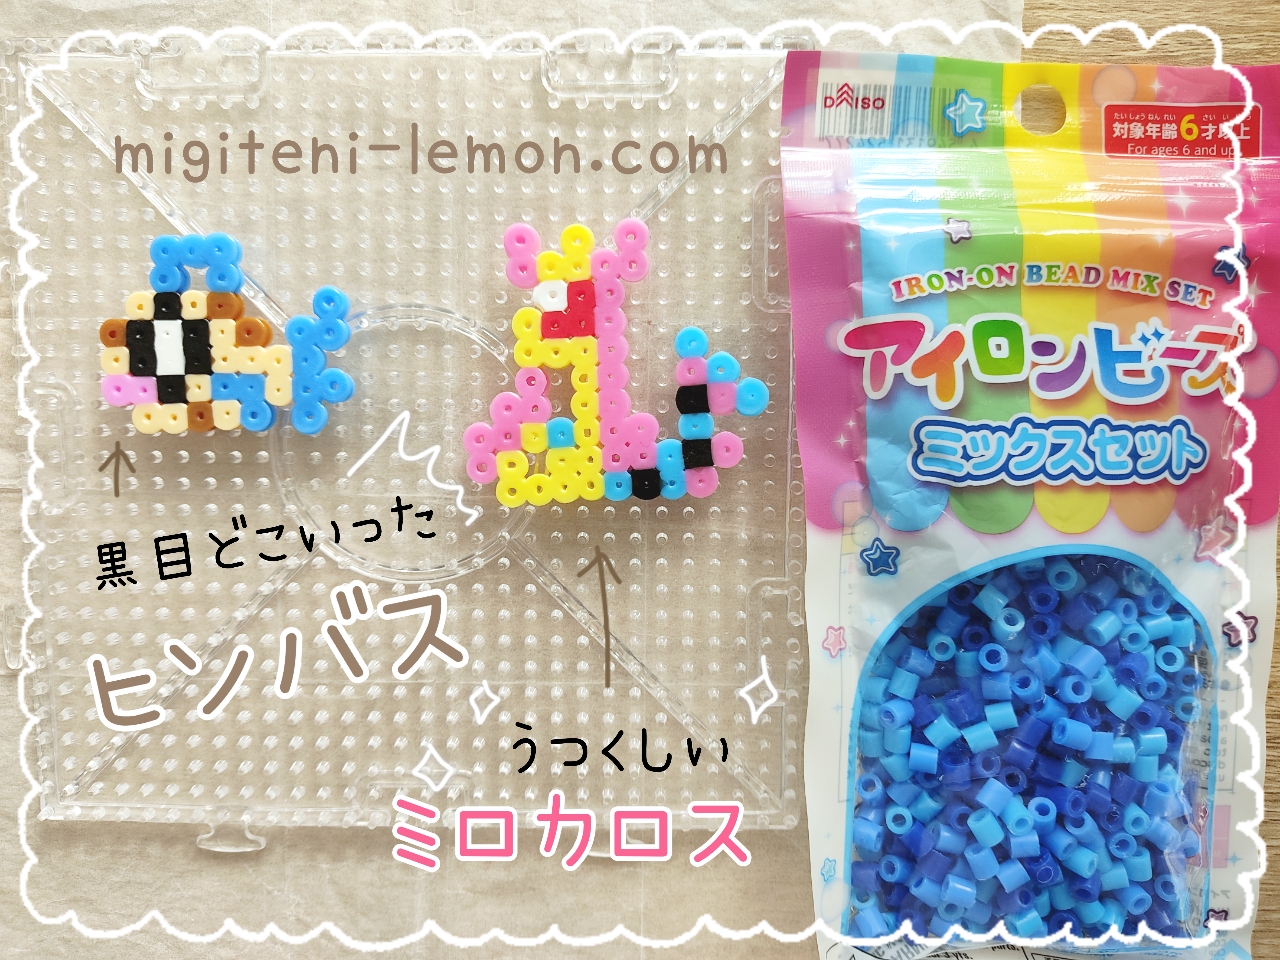 hinbasu-feebas-milokarosu-milotic-pokemon-bdsp-handmade-beads-free-zuan